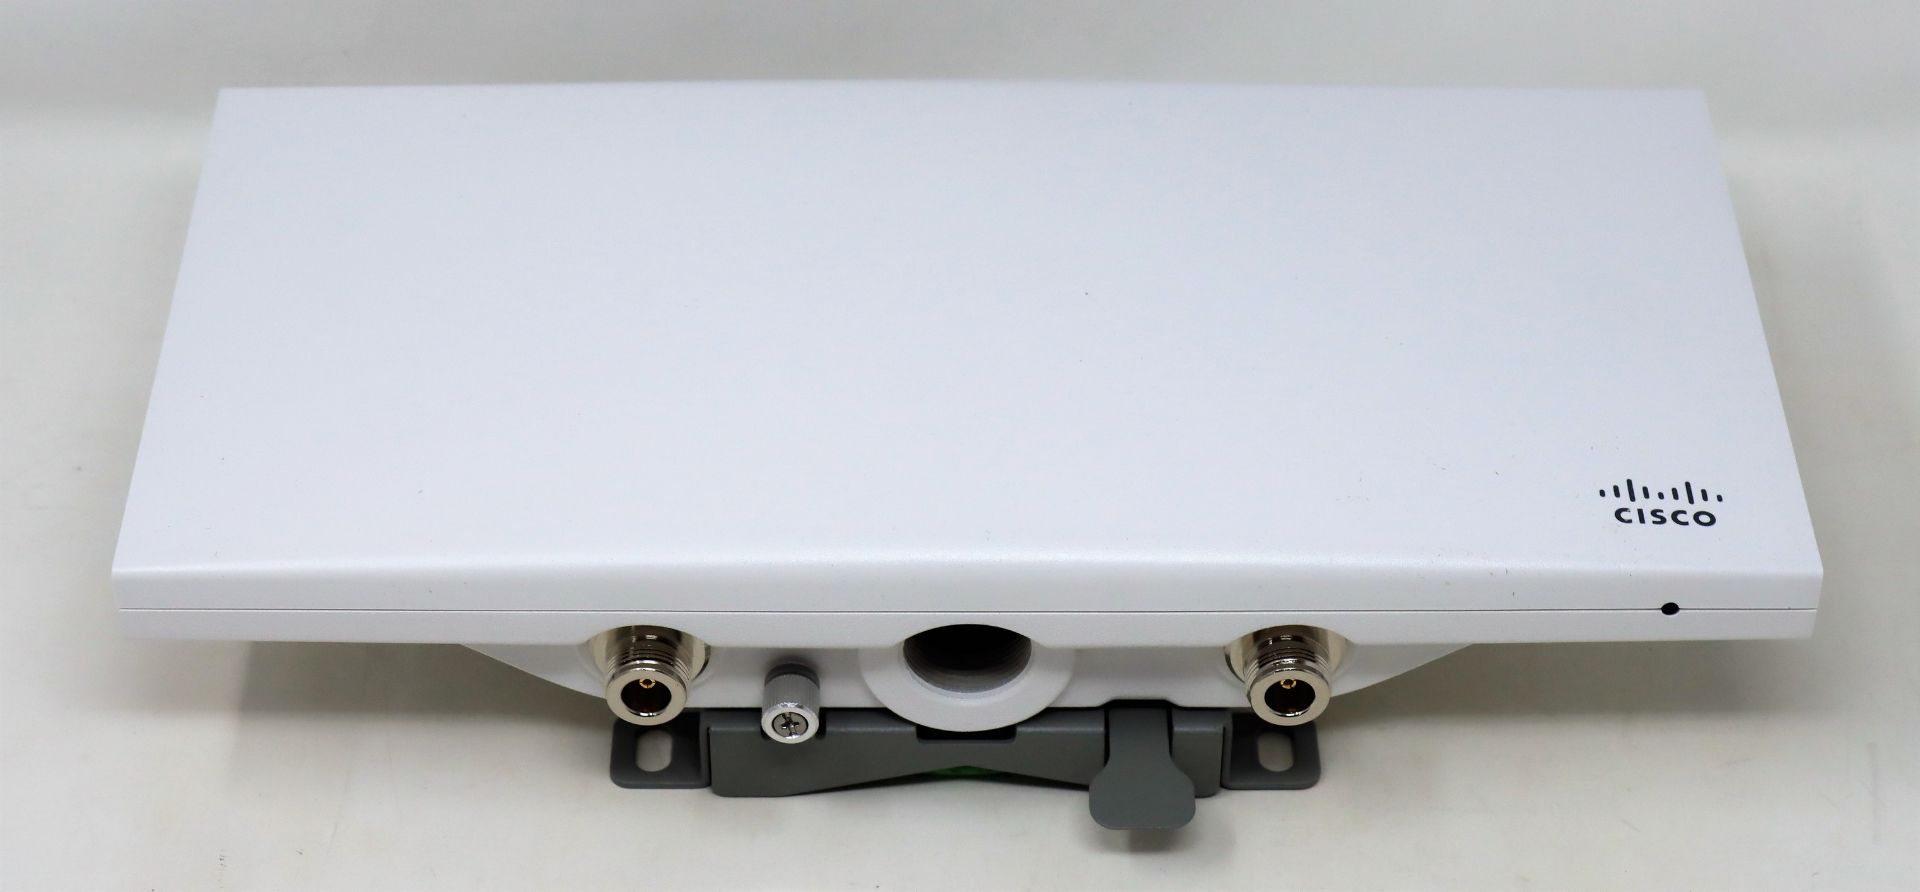 A boxed as new Cisco Meraki MR76 Outdoor WiFi 6 PoE Access Point (P/N: A90-100100 M/N: MR76-HW).